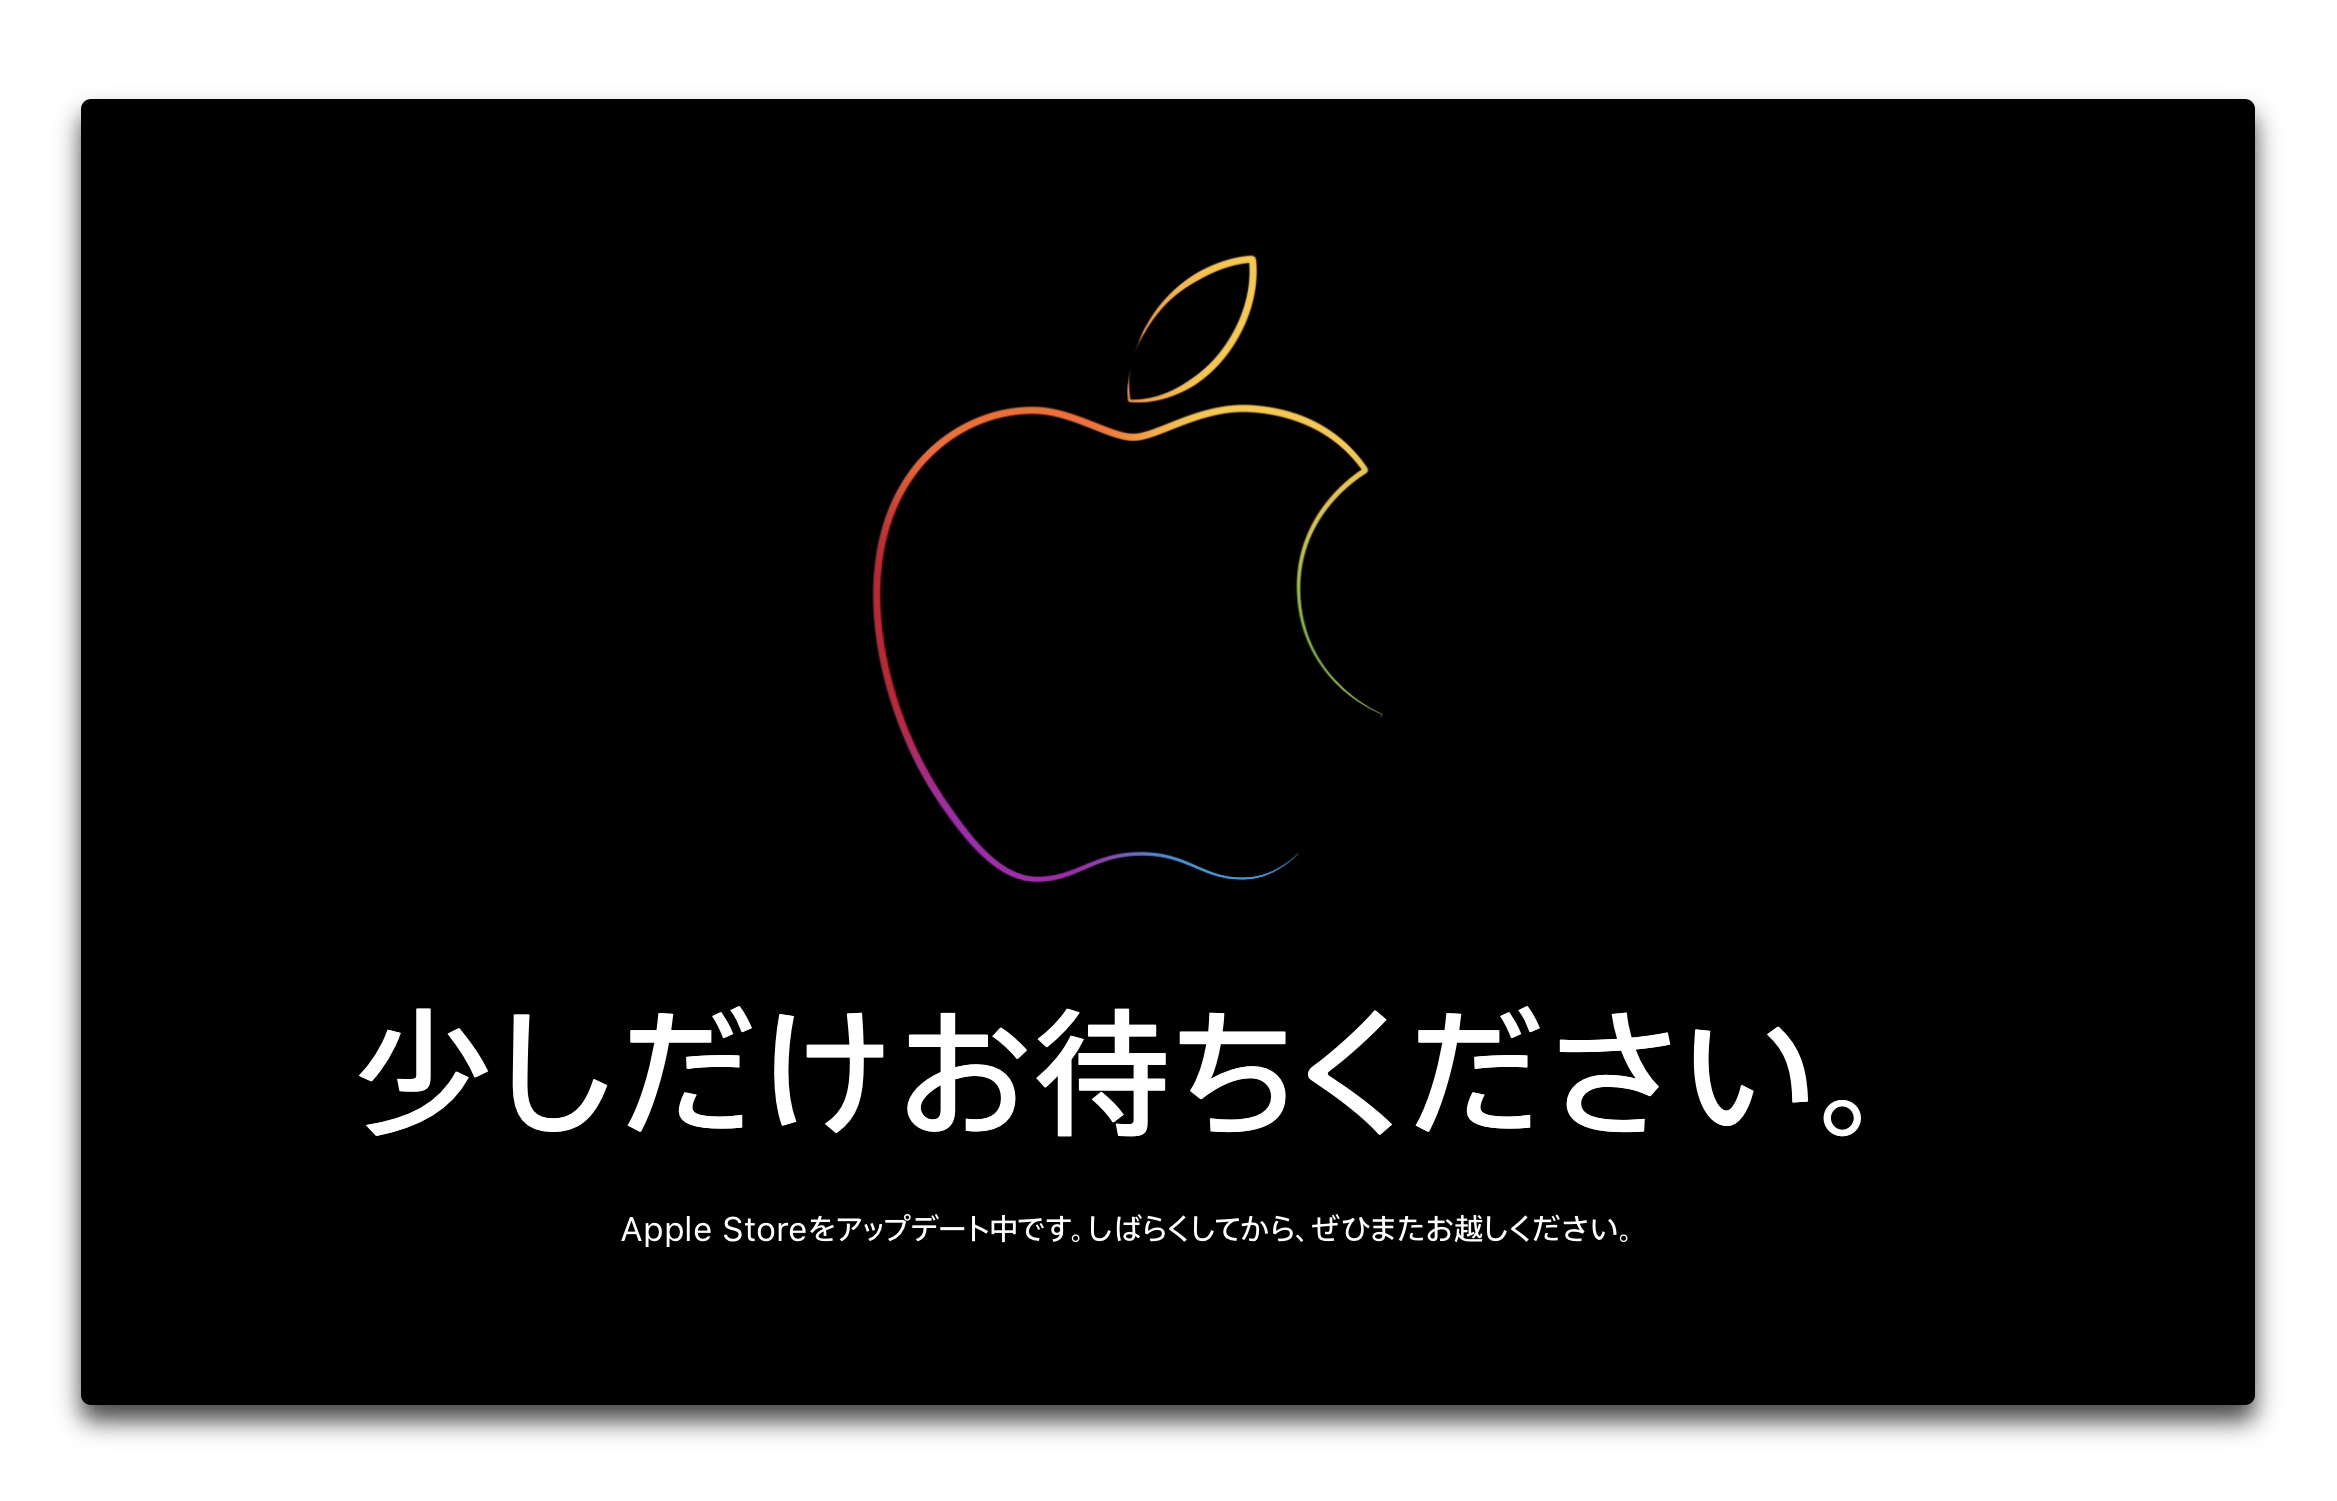 iMacとiPadの噂の中で、Apple Online Storeが「少しだけお待ちください」に